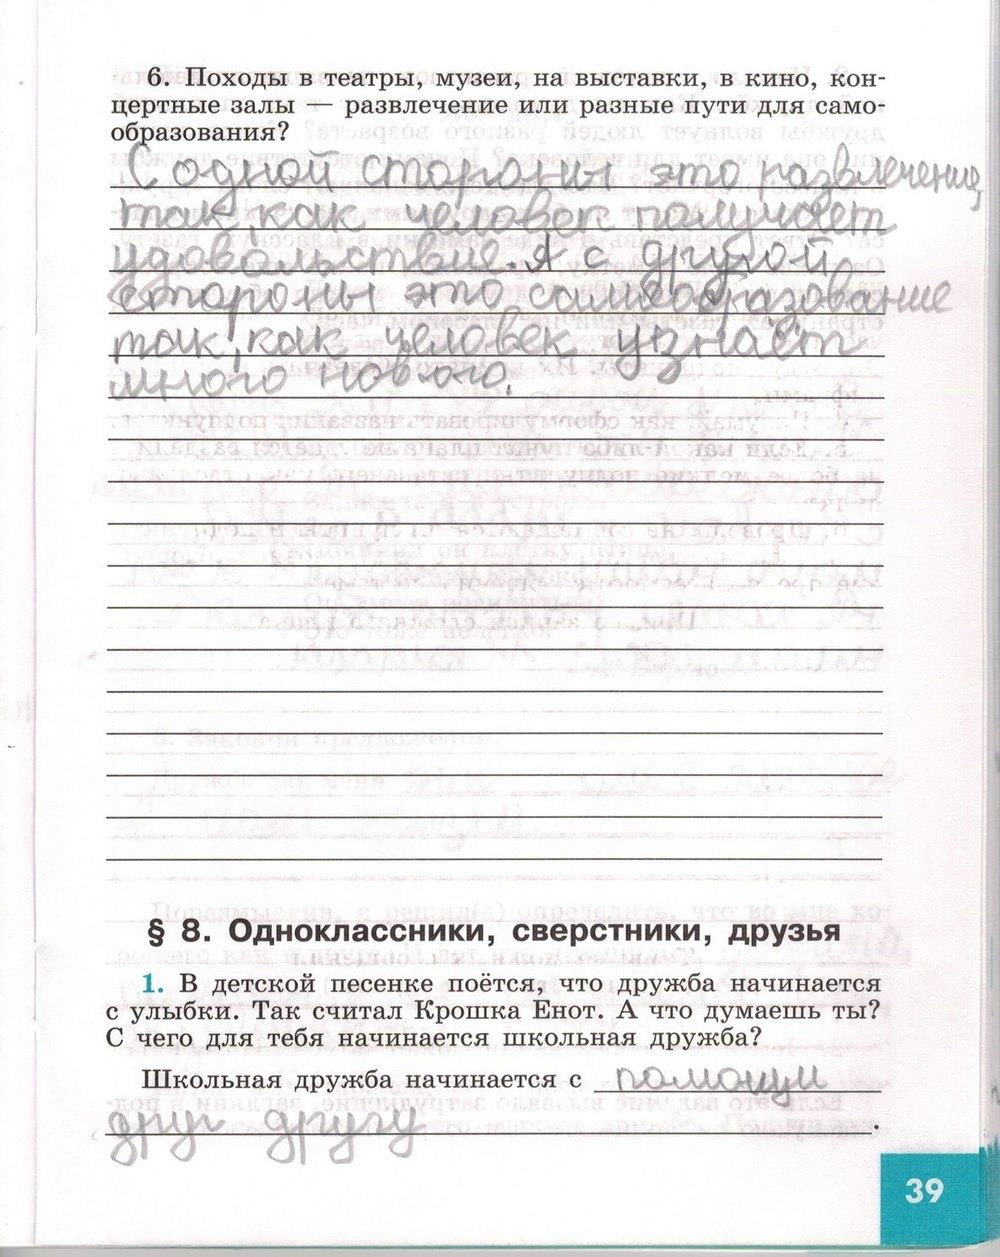 гдз 5 класс рабочая тетрадь страница 39 обществознание Иванова, Хотеенкова